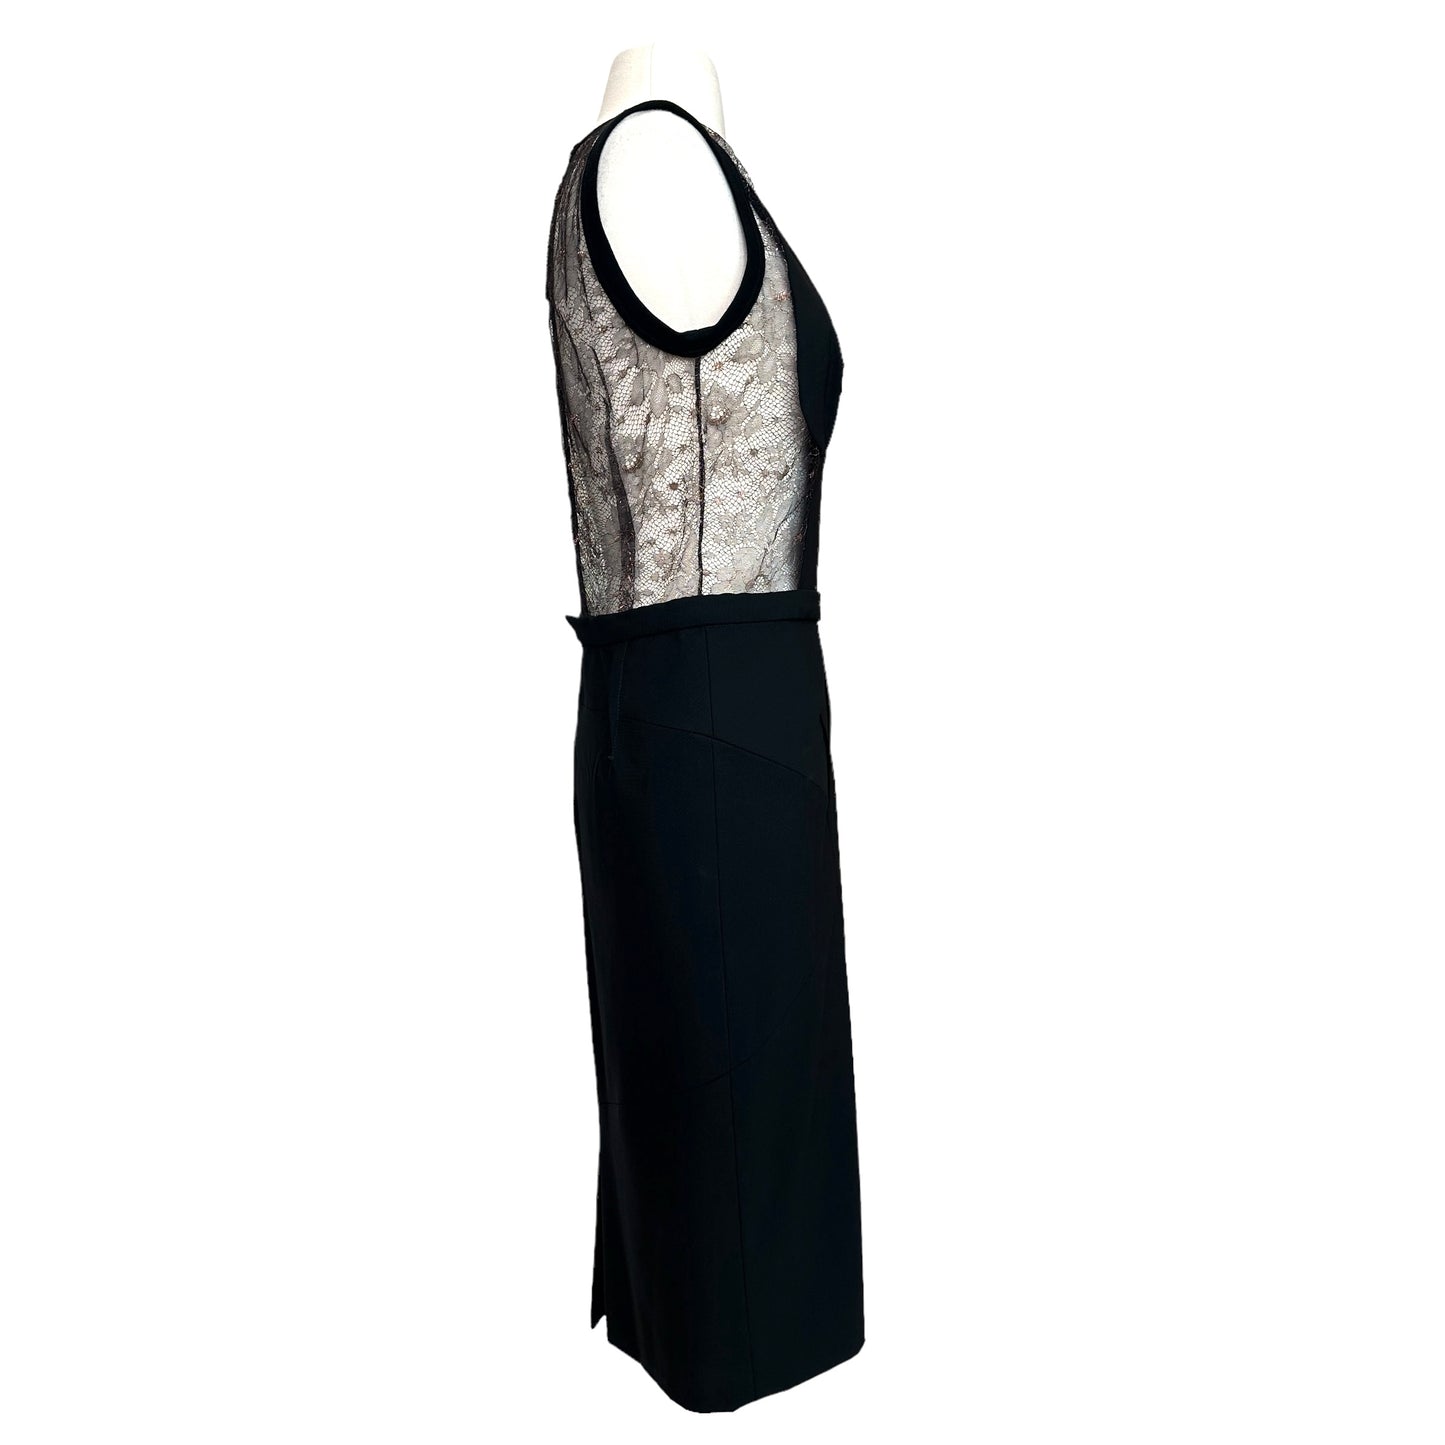 Black Lace Dress - M